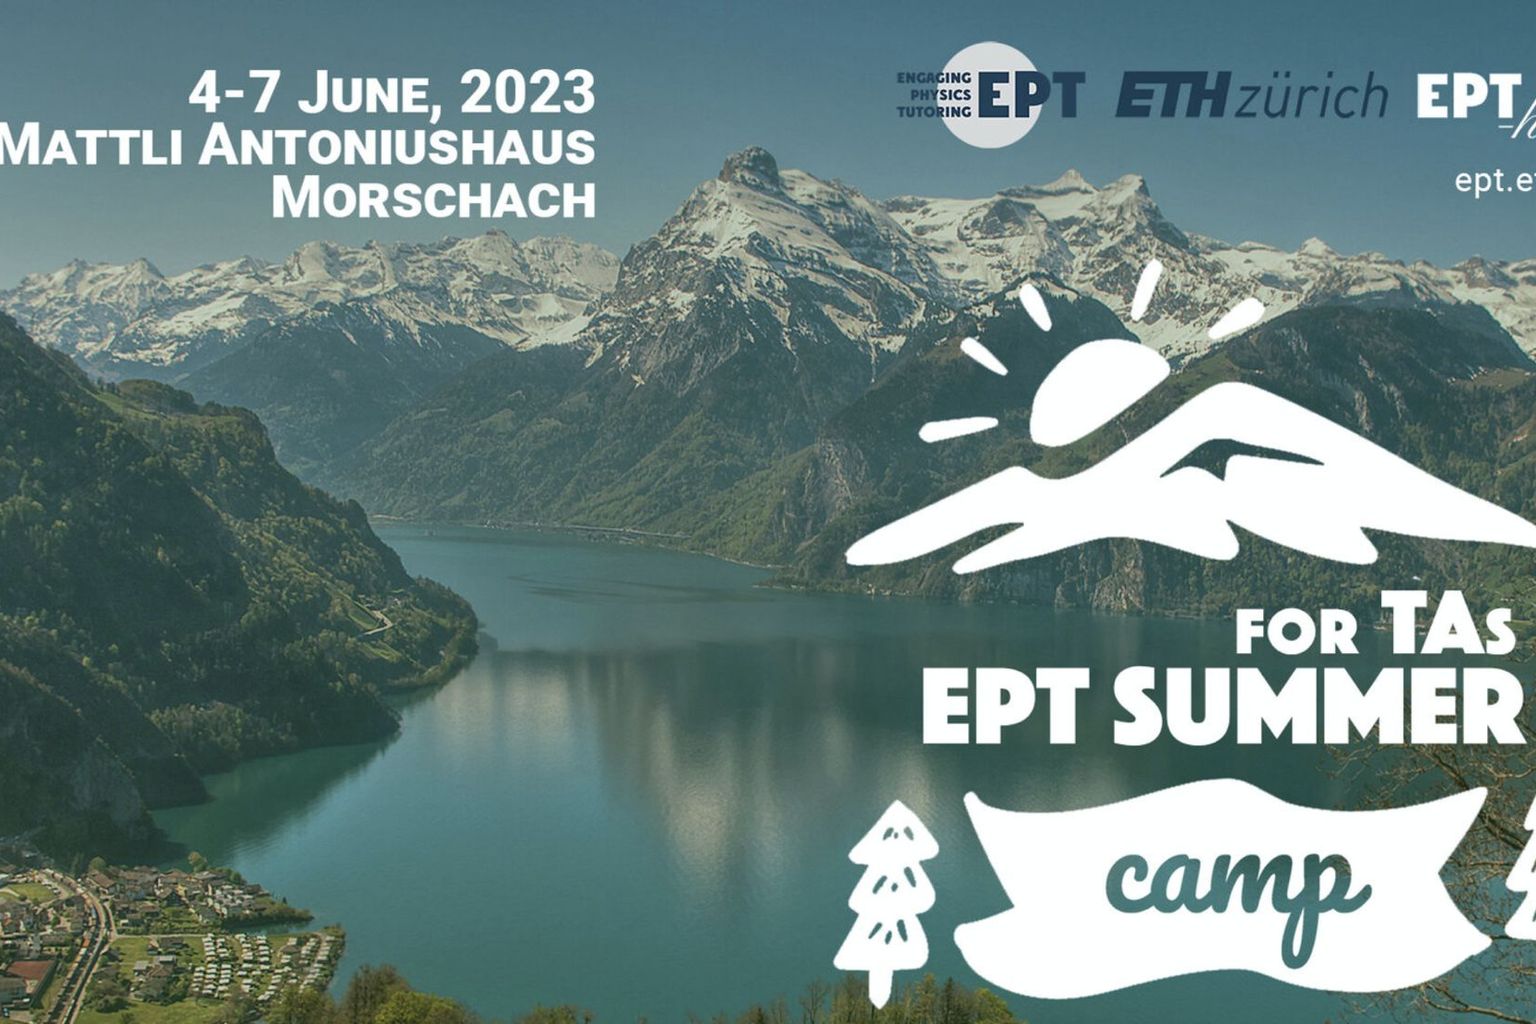 EPT summer camp 2023 image